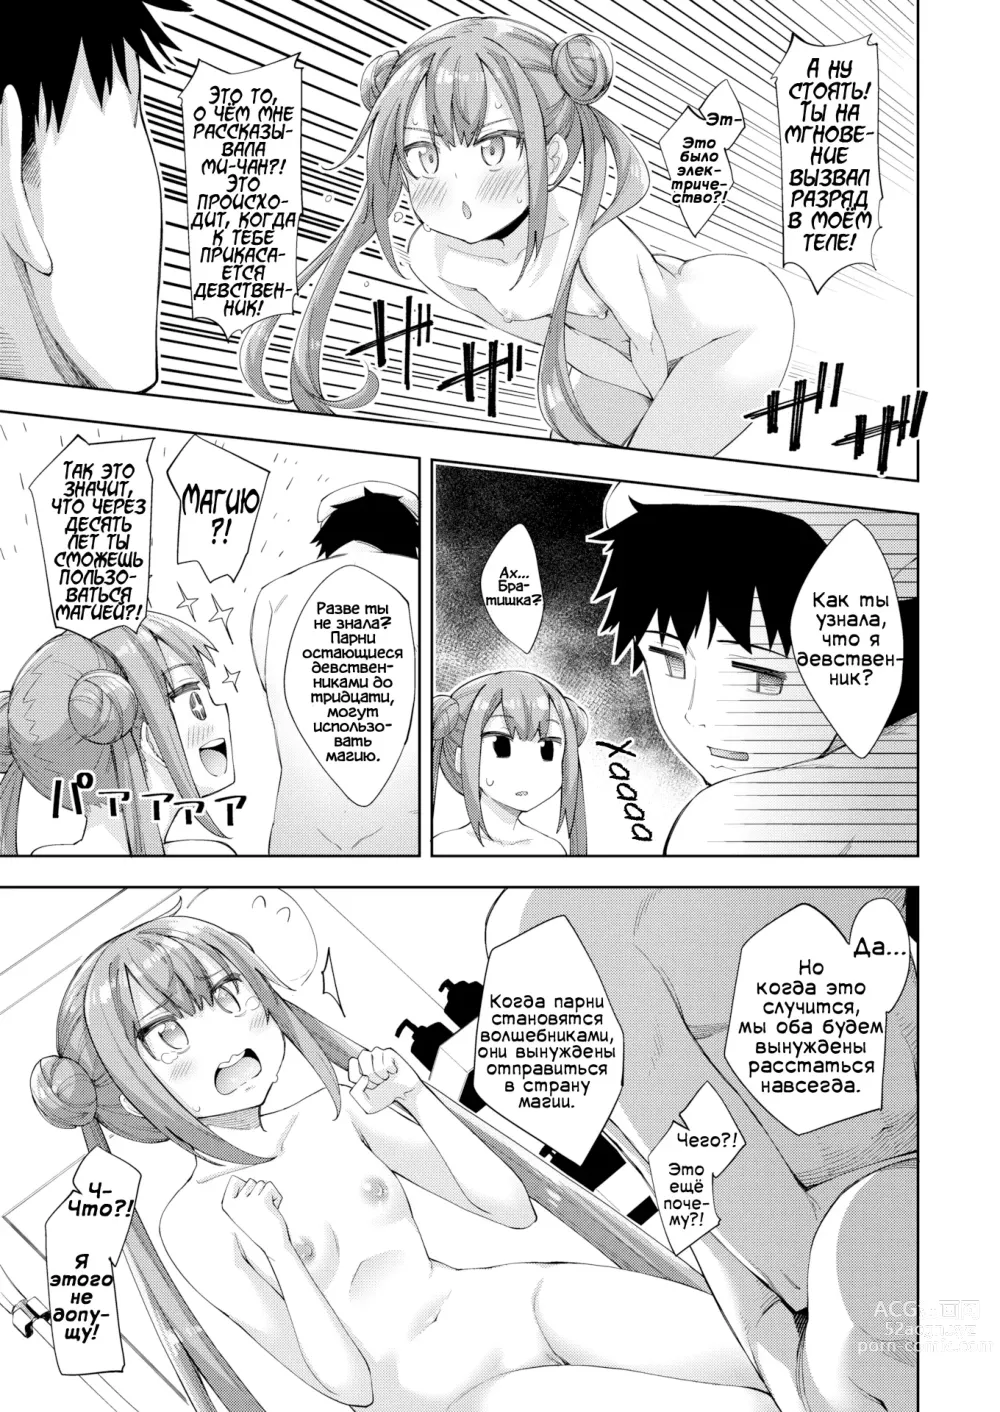 Page 5 of manga Aho No Ko!